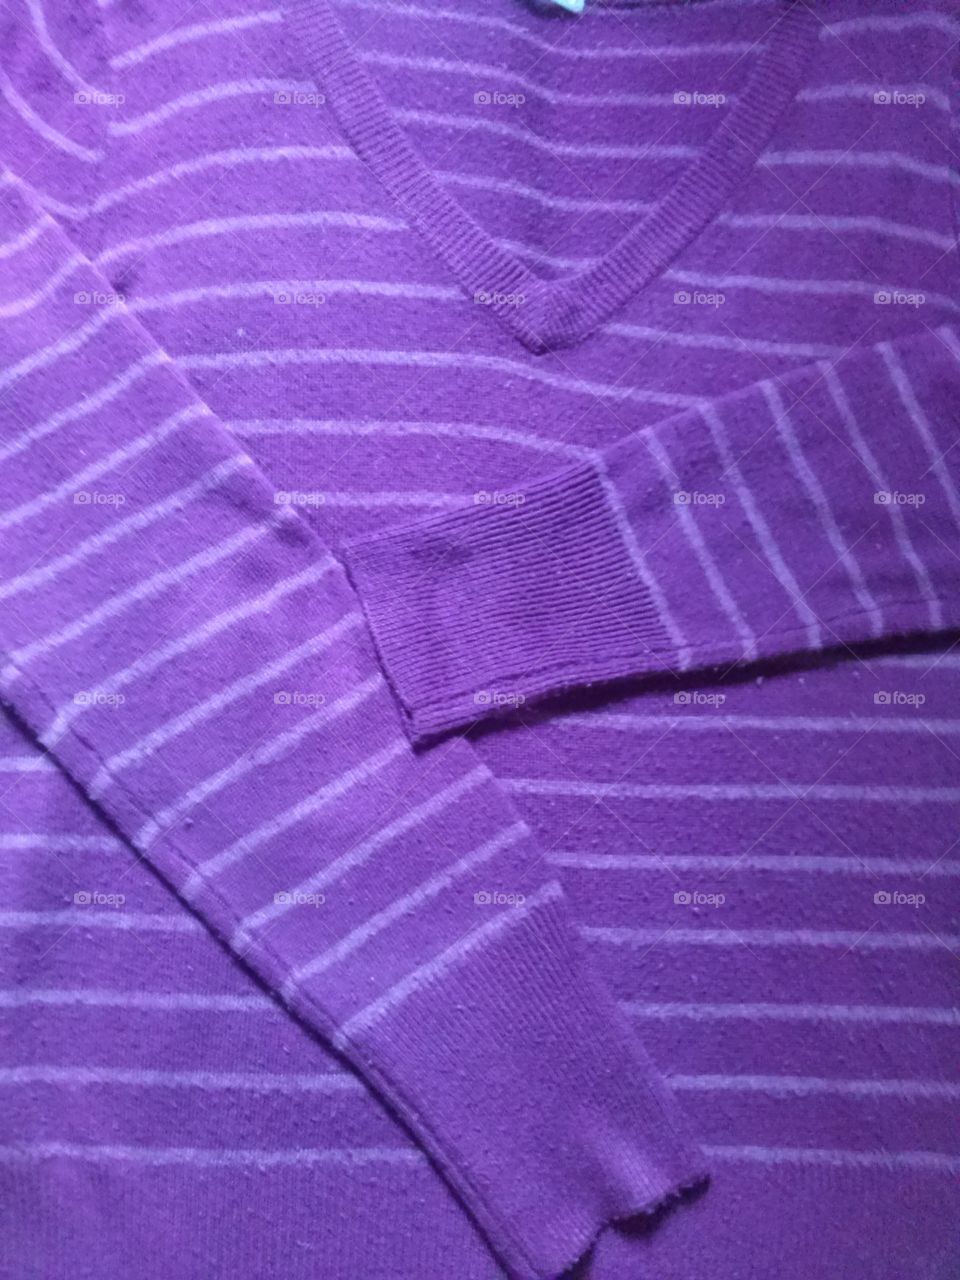 Close-up of purple sweater